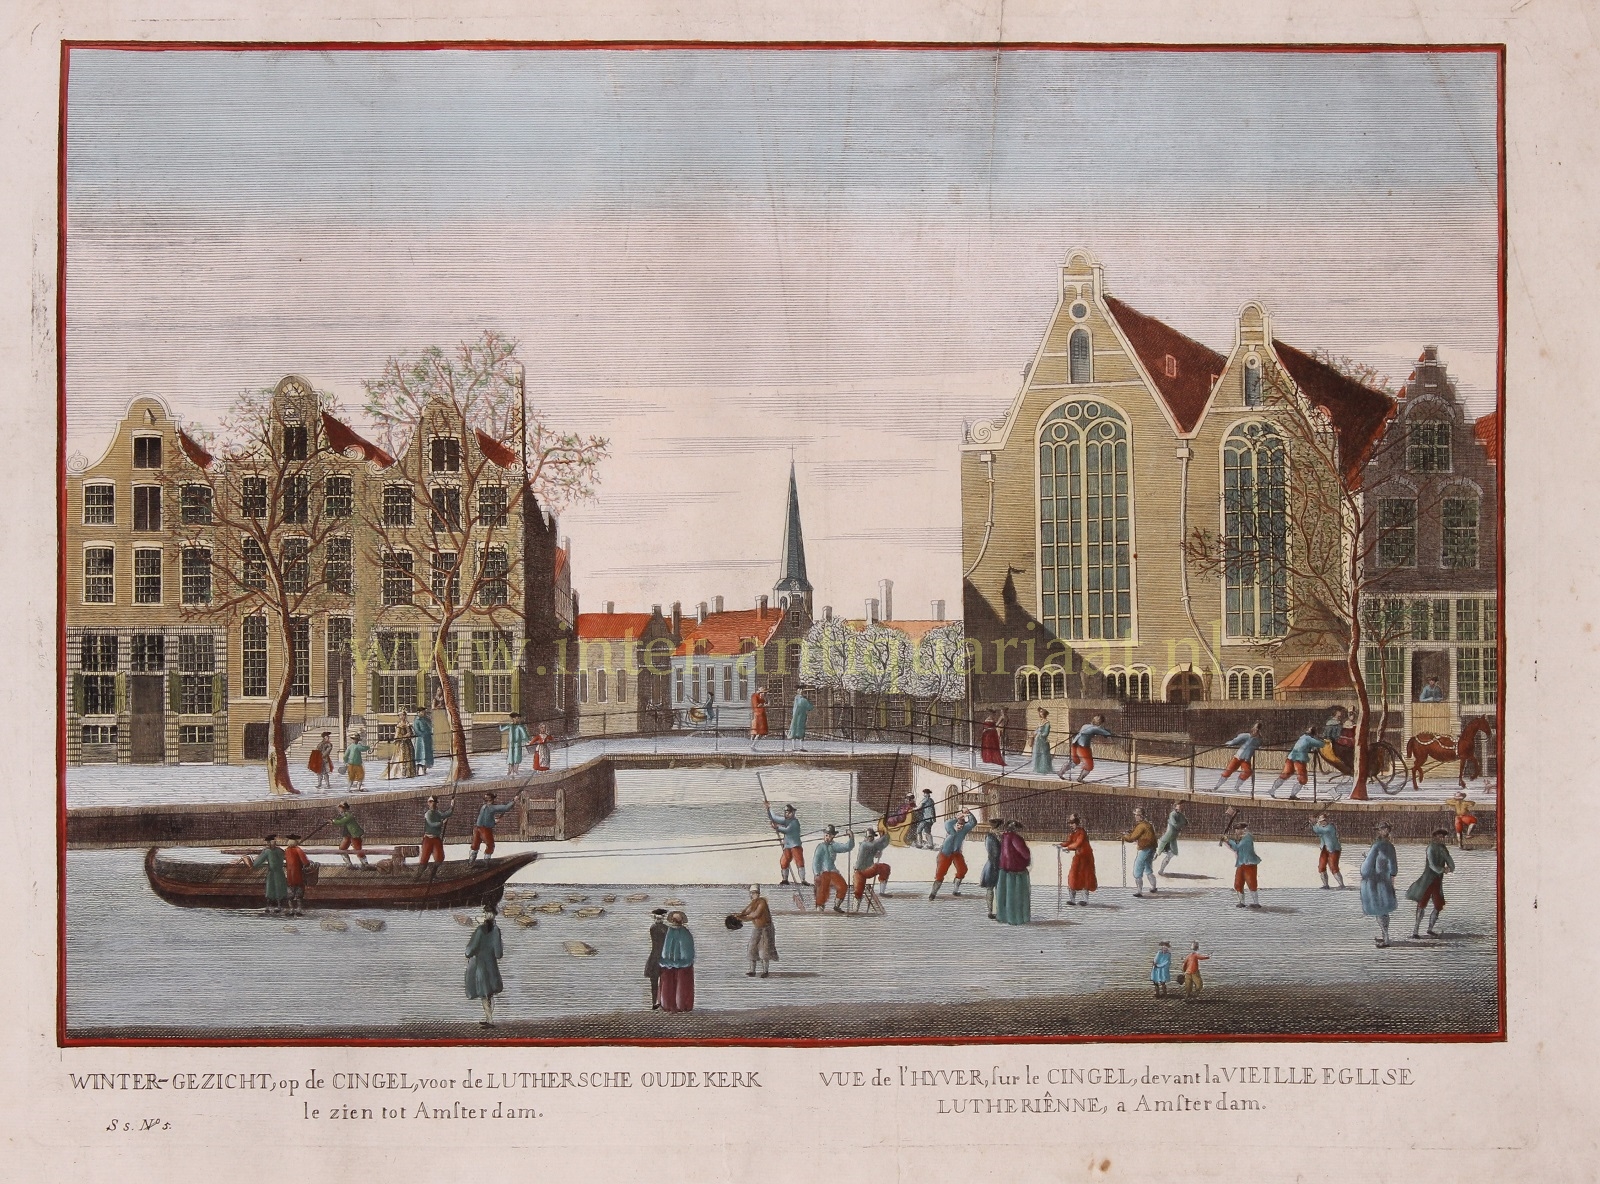 Schouten-- Herman - Amsterdam, winter on the Singel canal - after Herman Schouten, c. 1783